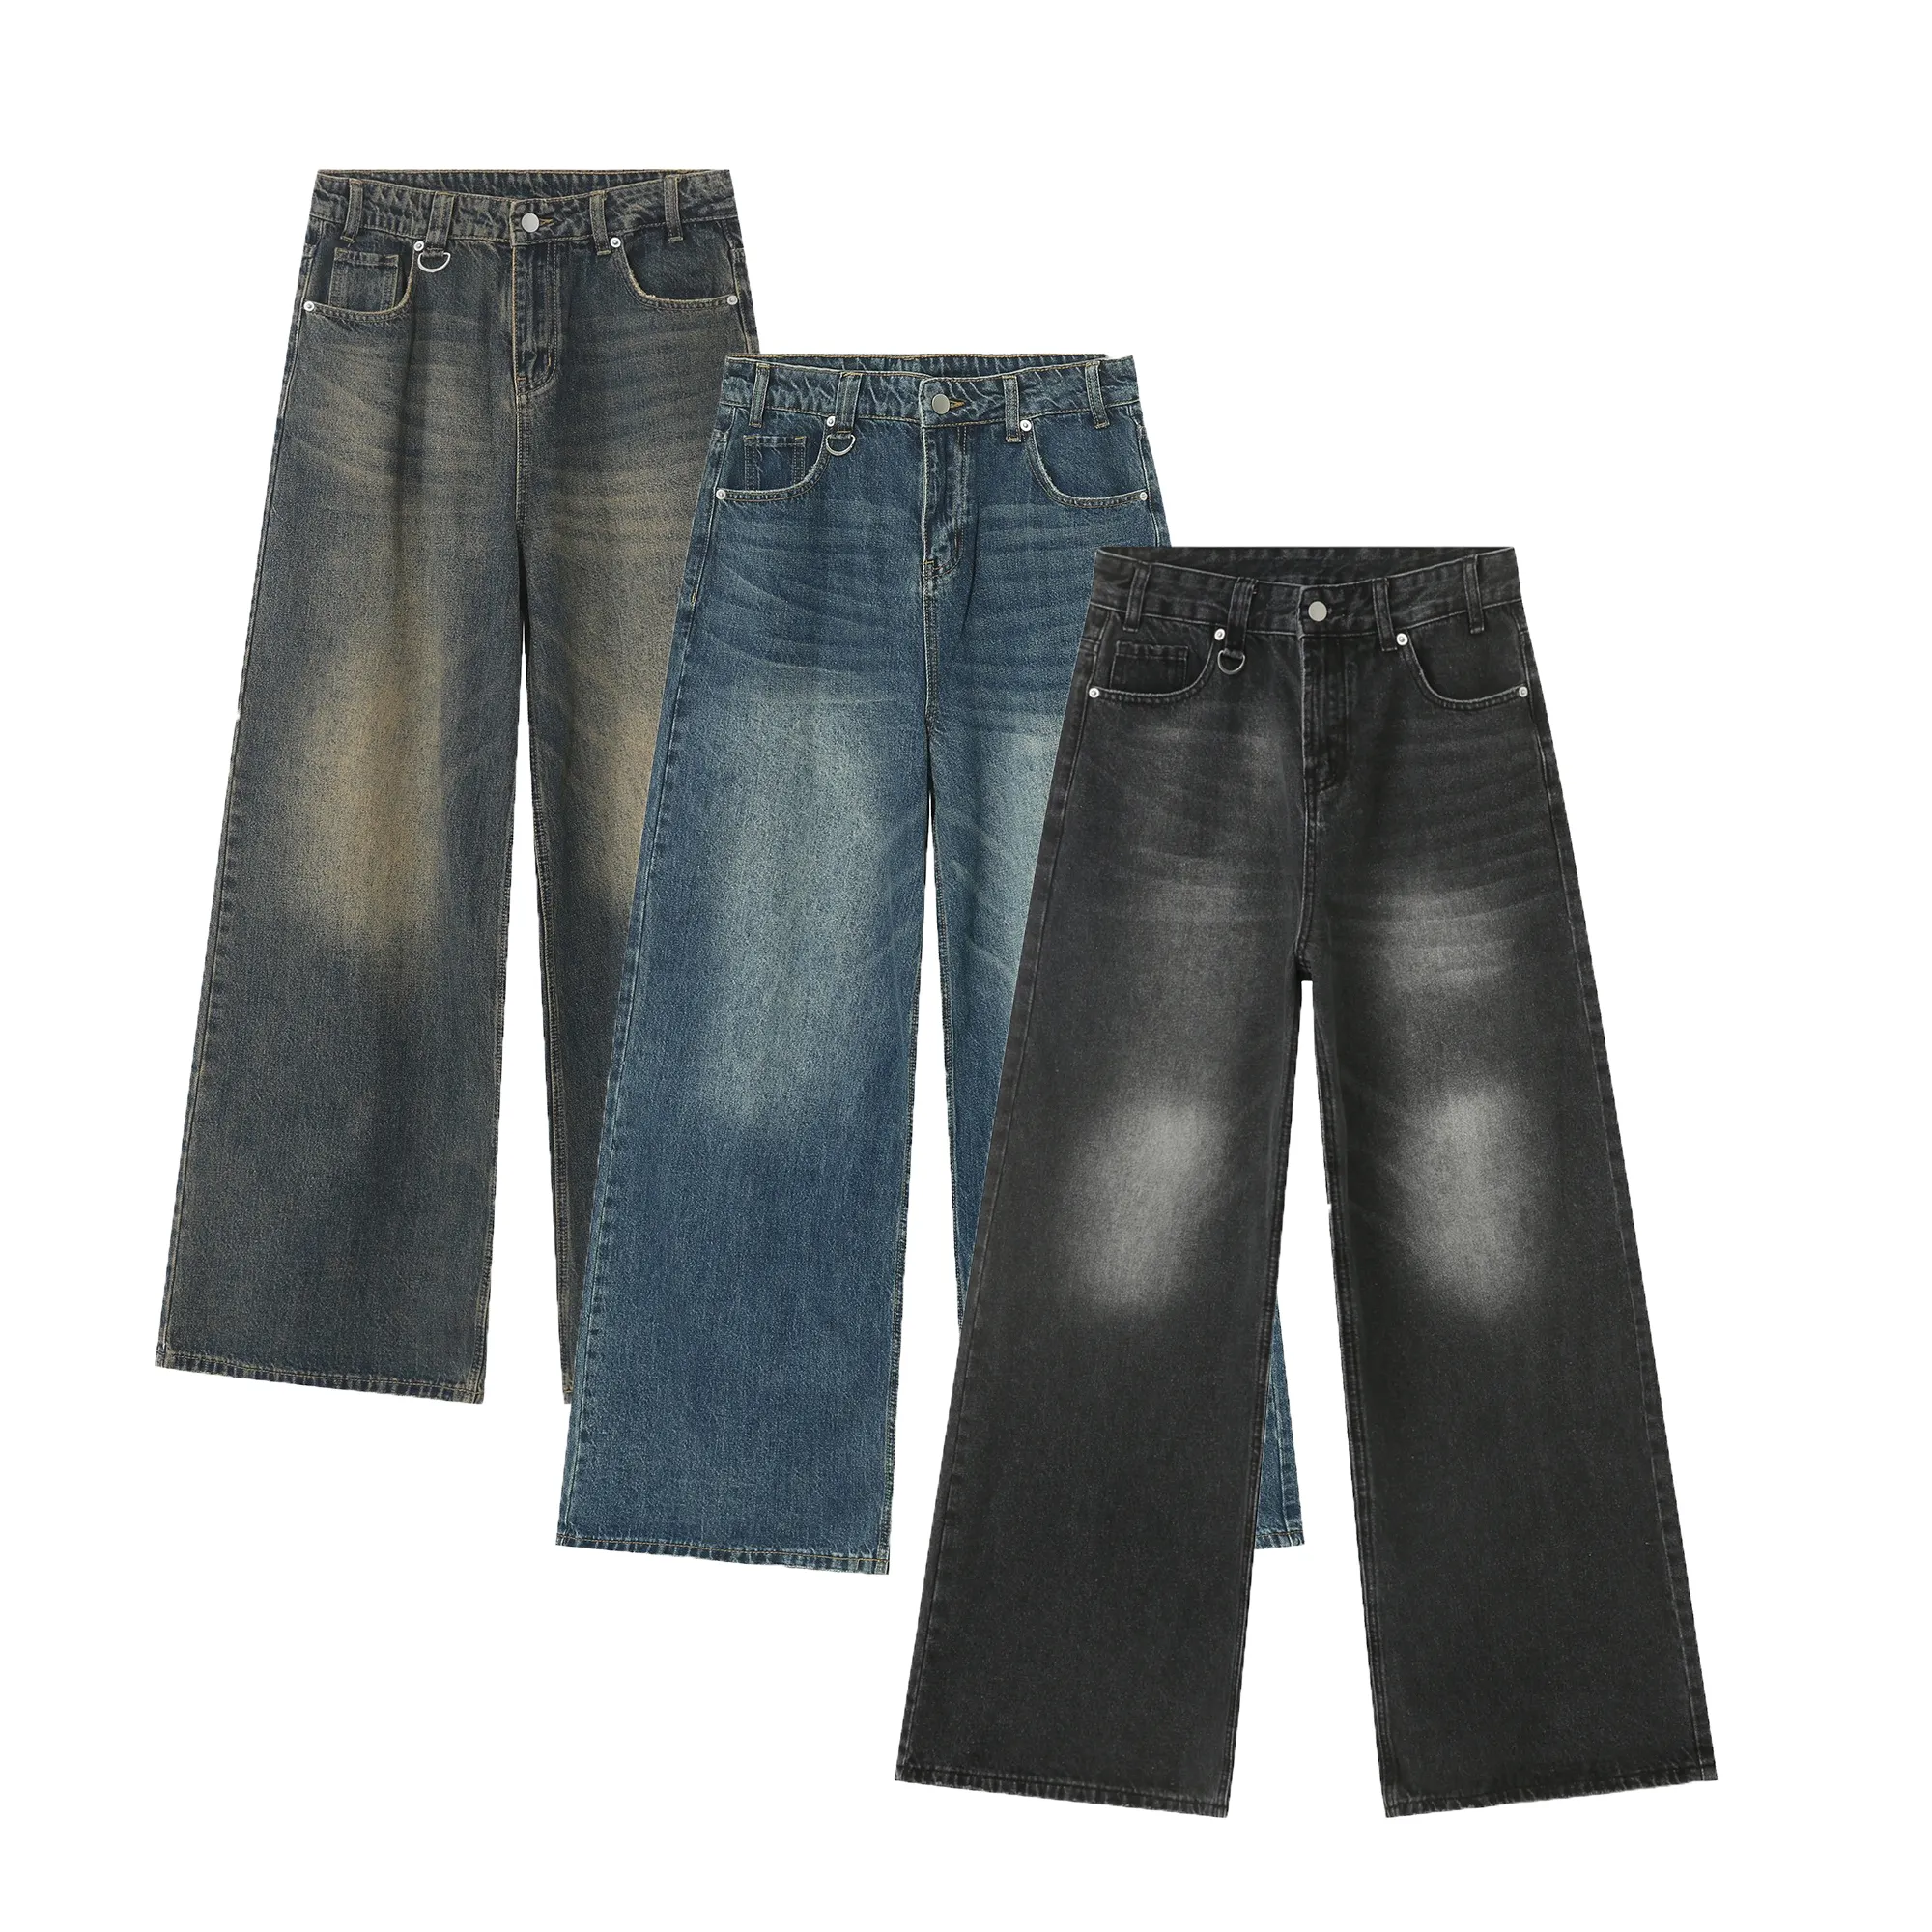 Individuelle Herren-Anpassung dunkelblaue Jeans-Hose Designer Neuausgabe Original-Anpassung Denim Jeans große Jungs Polar-Skate-Hose